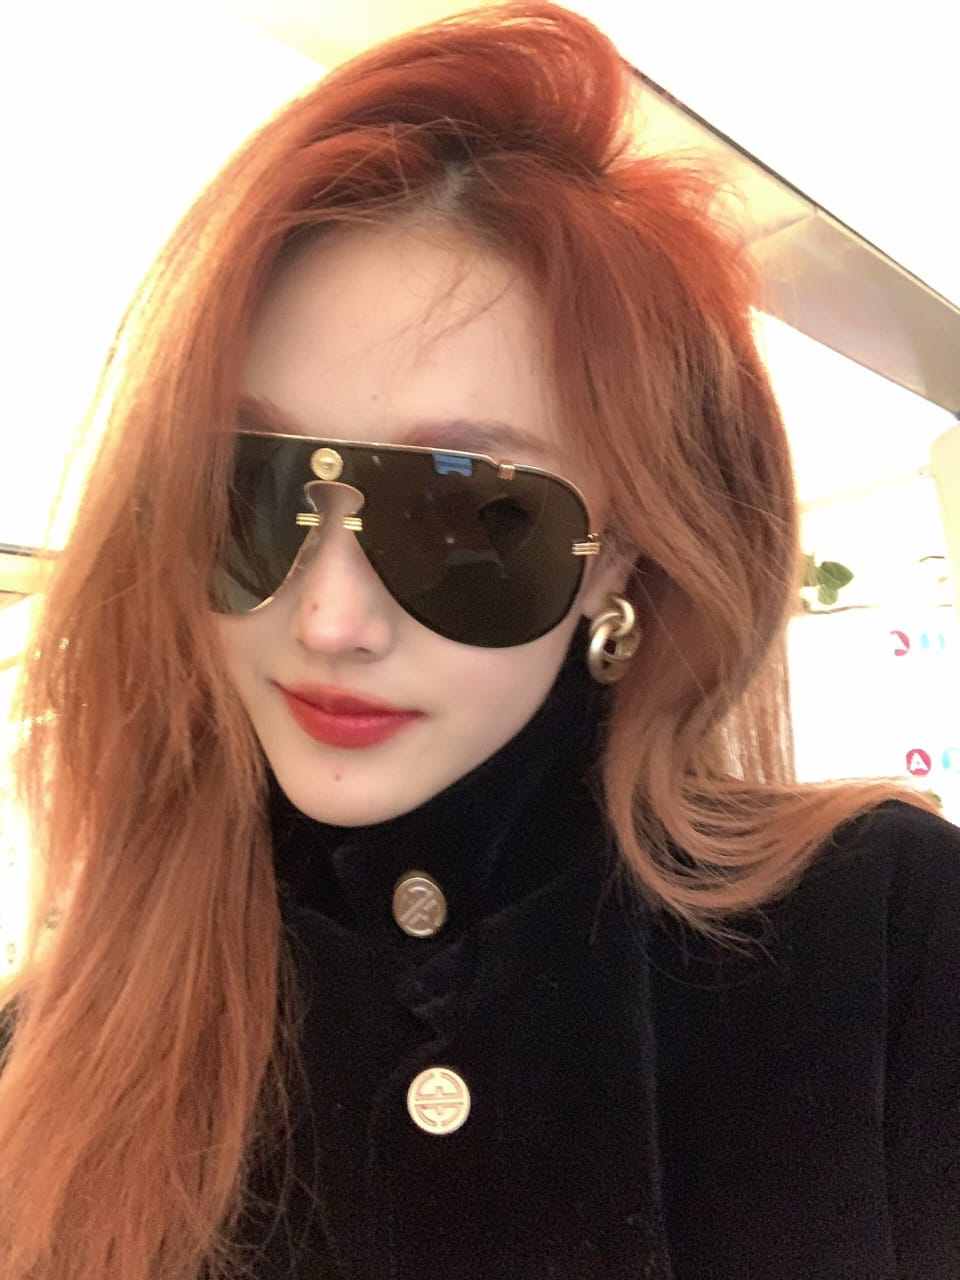 Versace Sunglasses Ve2243